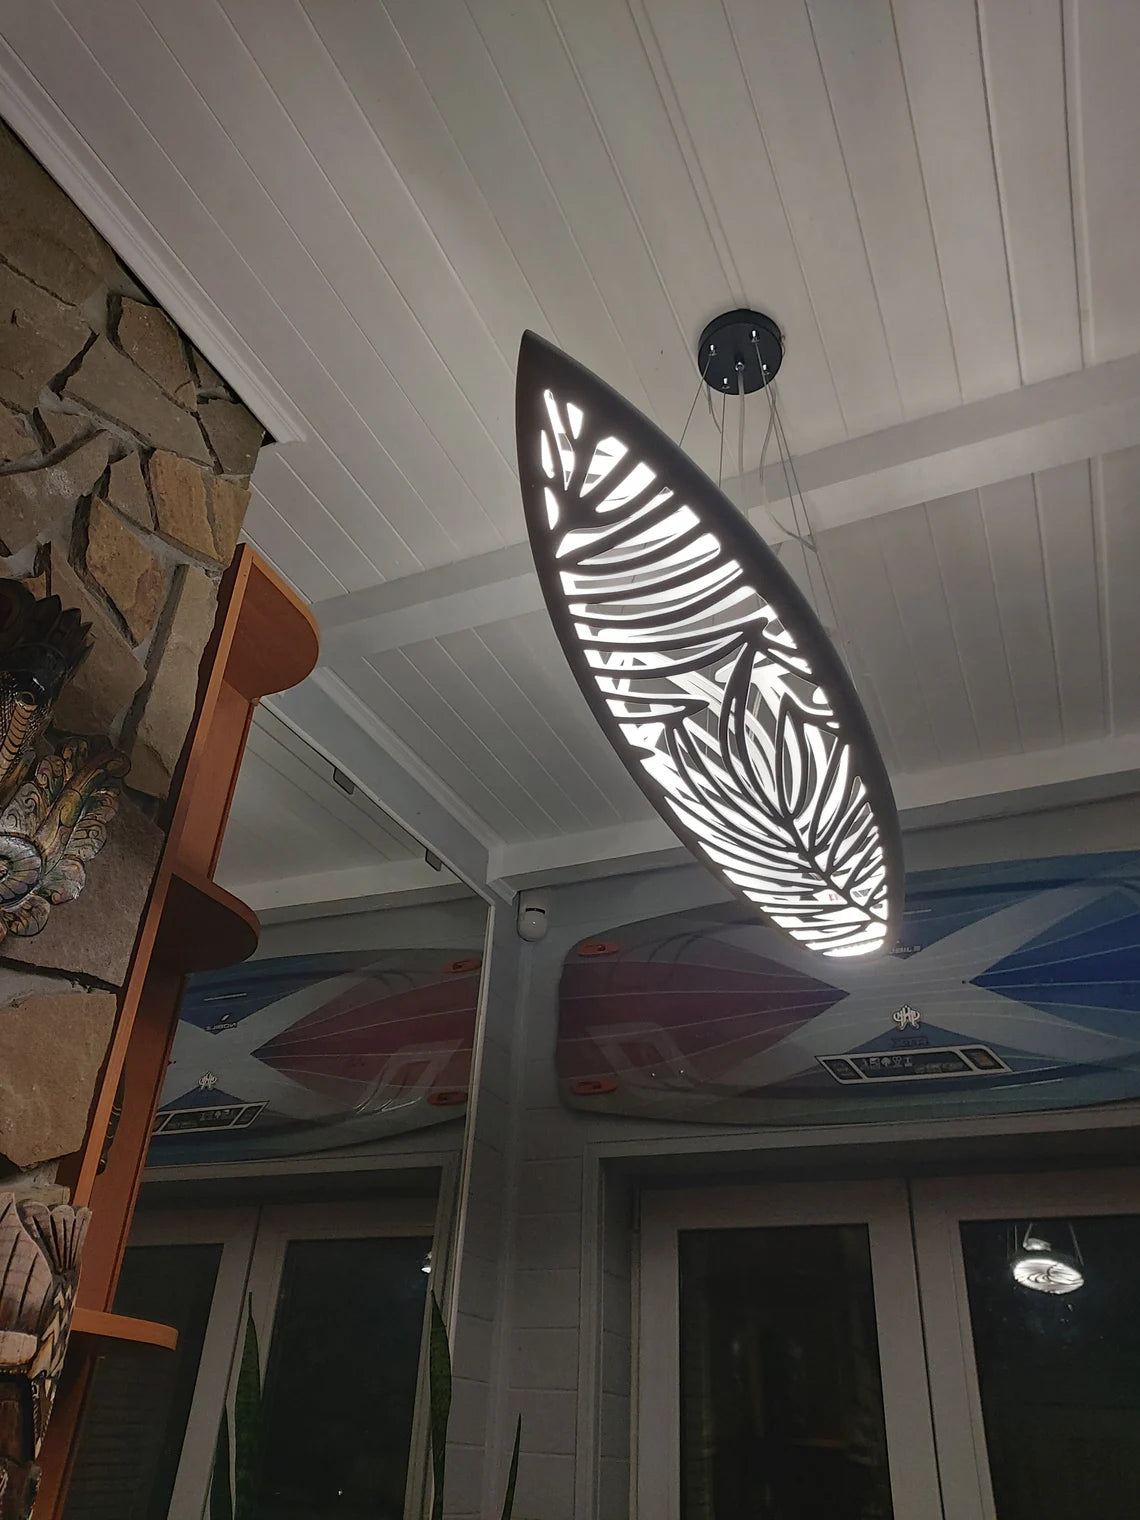 Surfing Ceiling Light for Home Decor